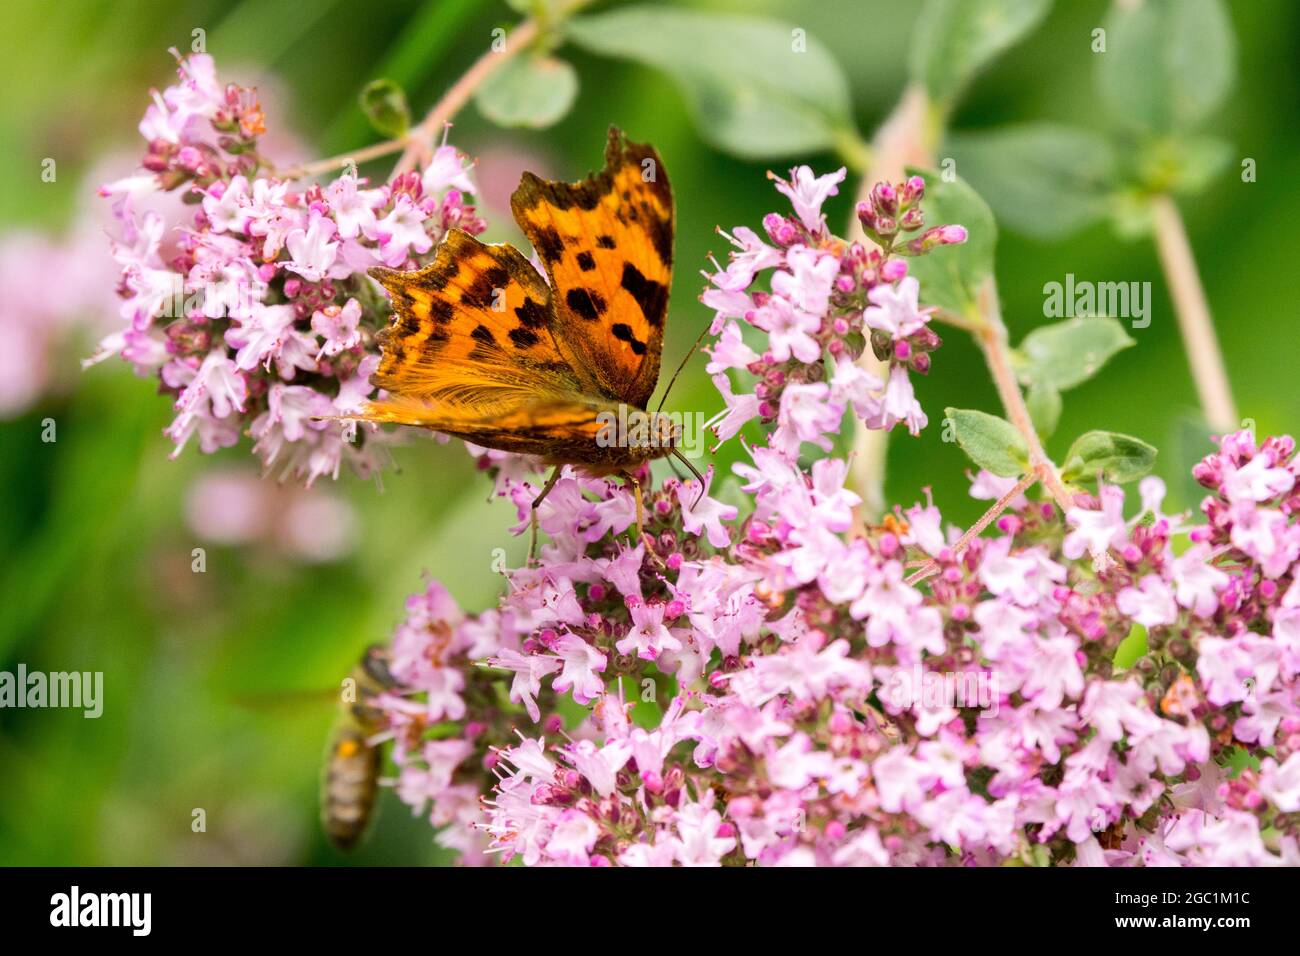 Butterfly on flower, Origanum vulgare Wild marjoram Polygonia c-album Stock Photo